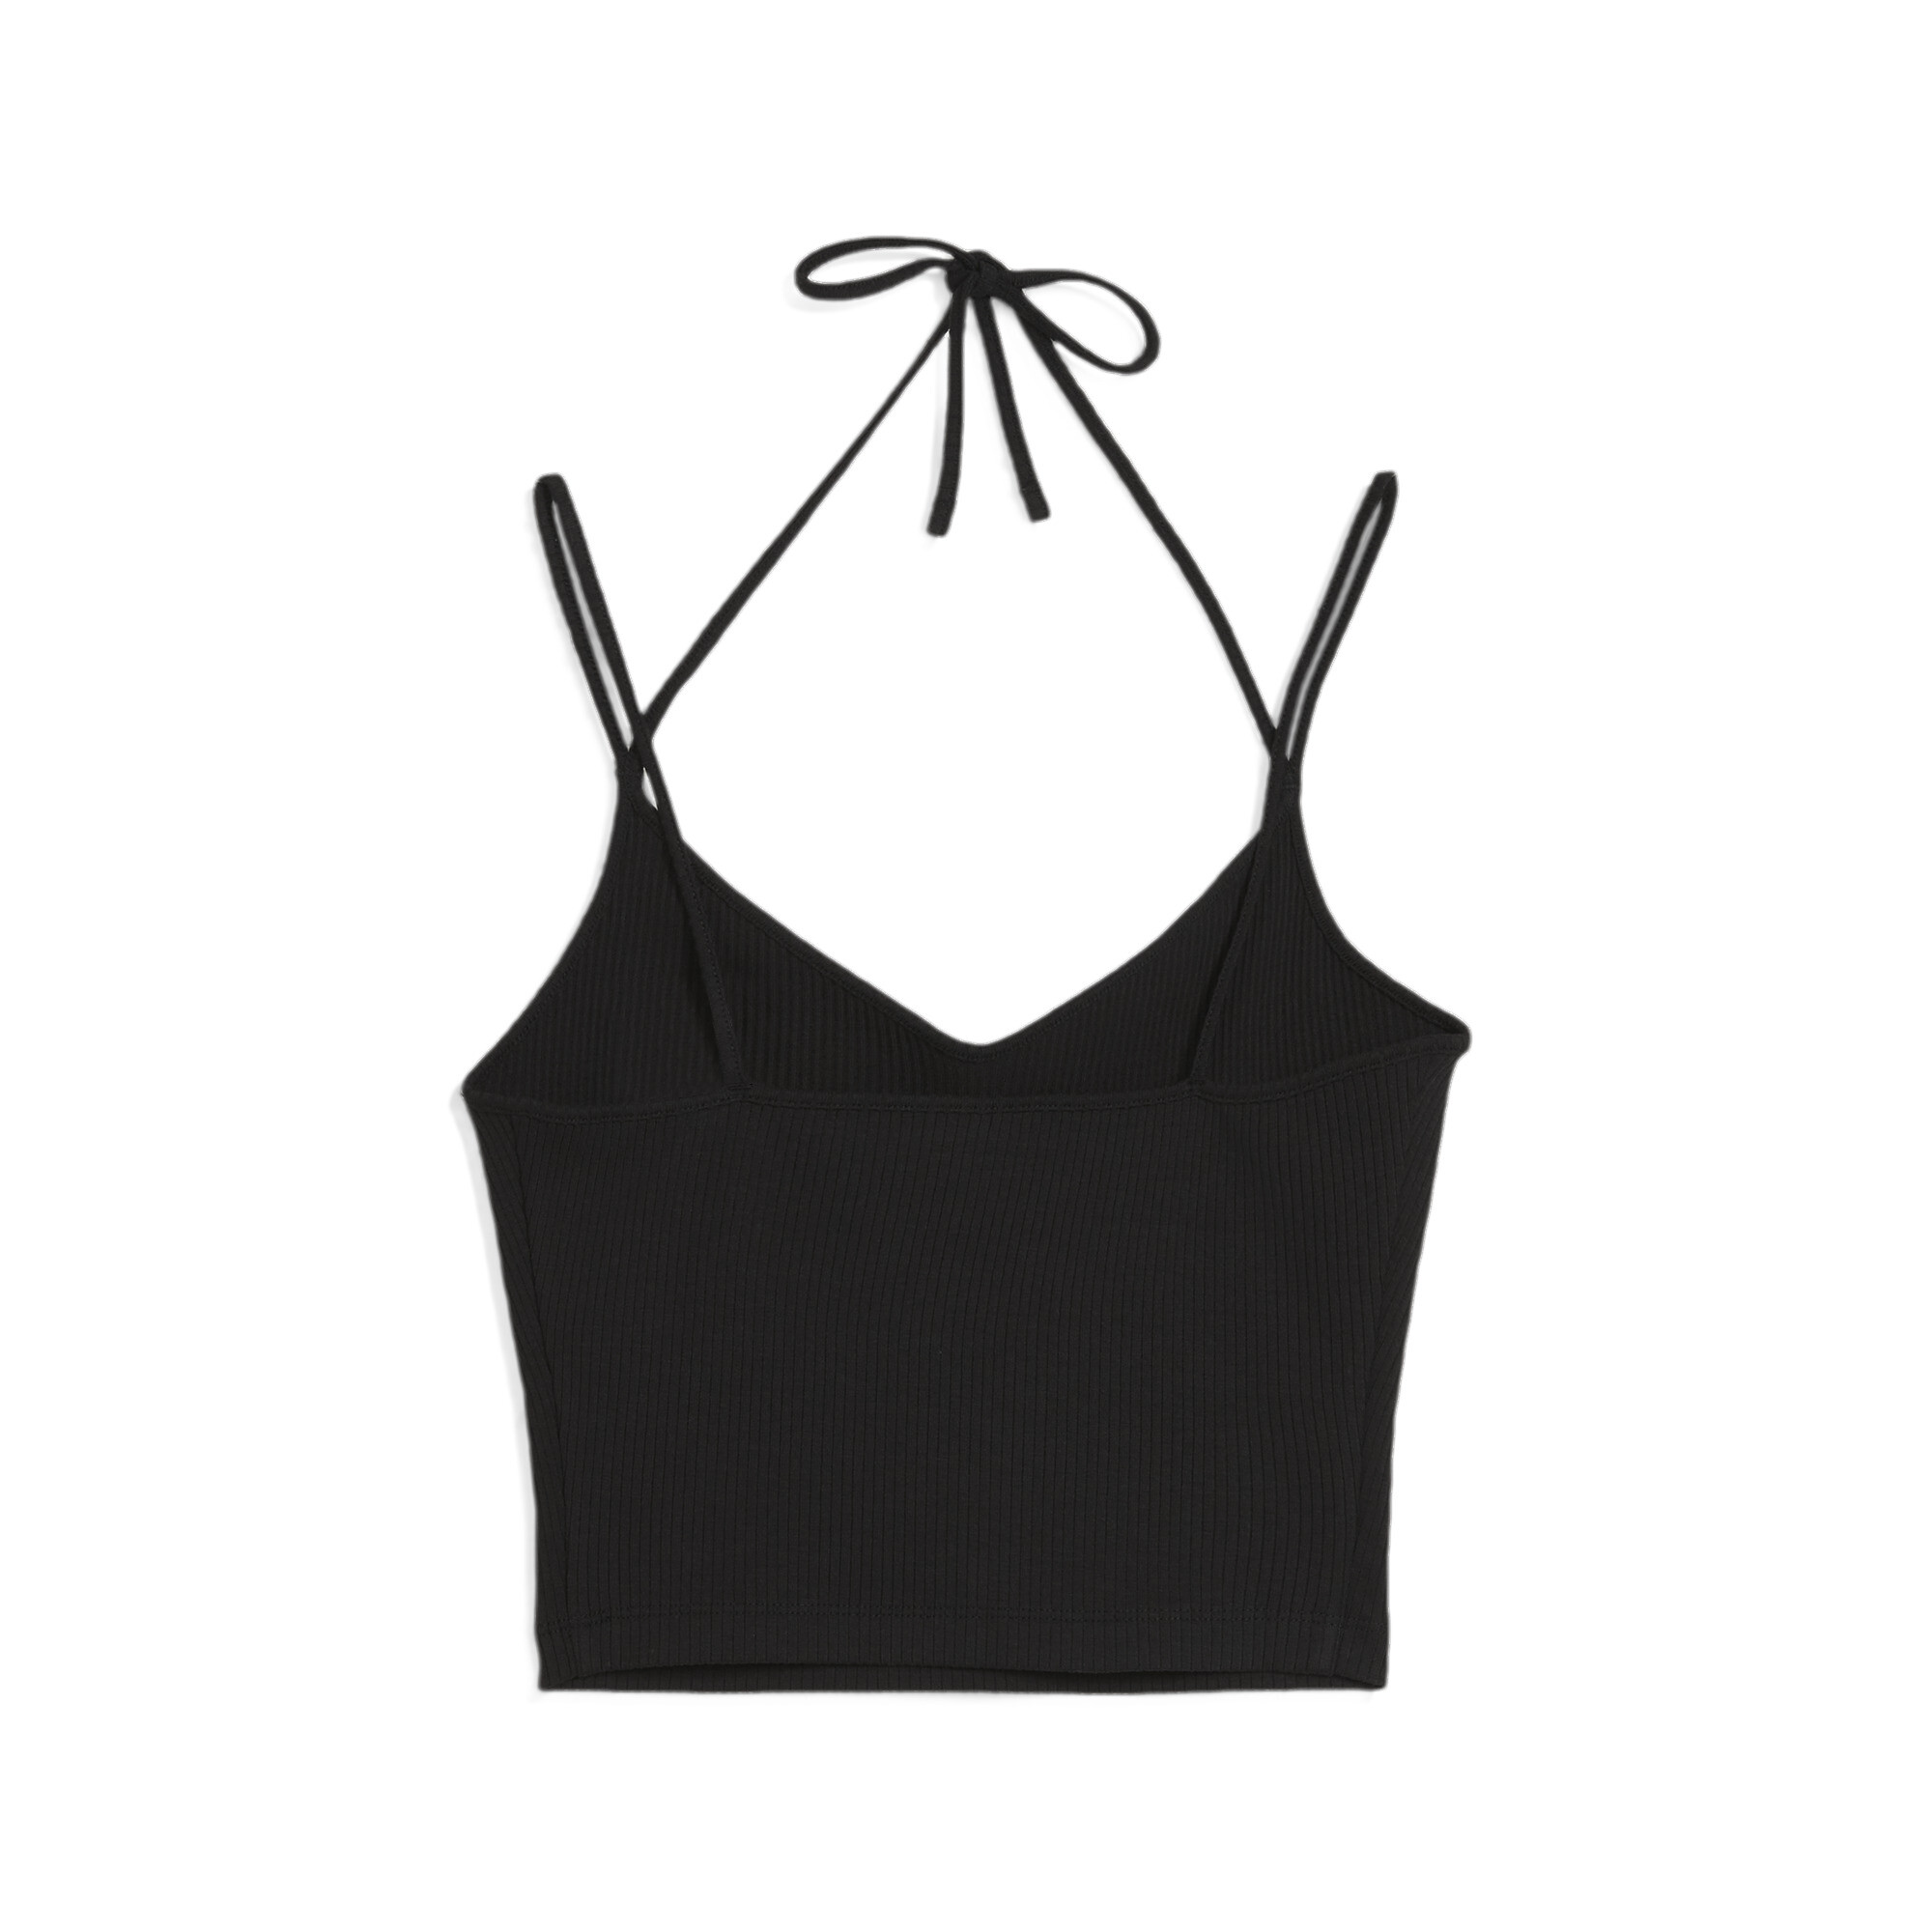 Women's Puma CLASSICS Ribbed Crop Top, Black, Size XL, Clothing